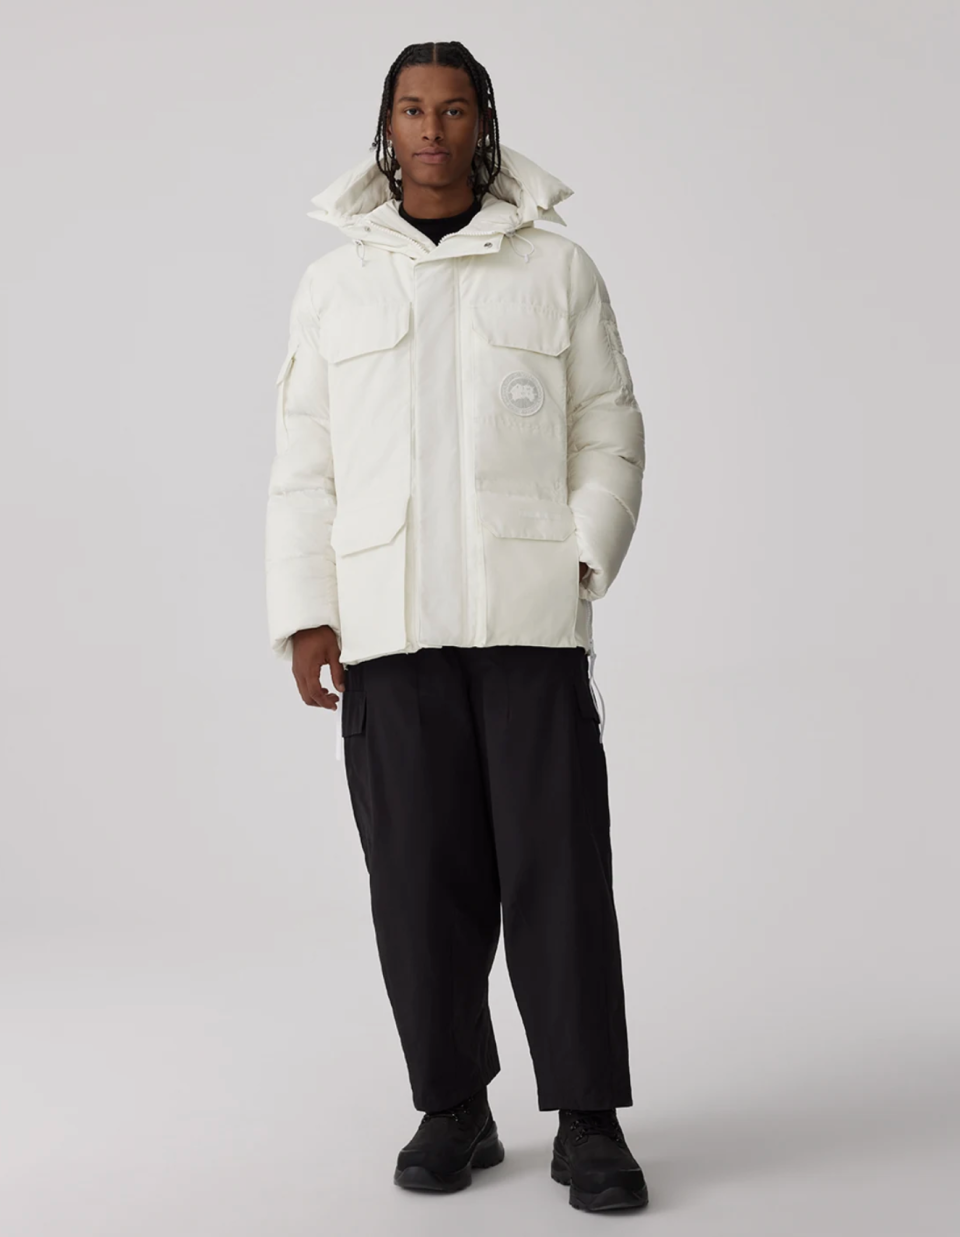 man wearing black pants and white winter jacket, Paradigm Expedition Parka